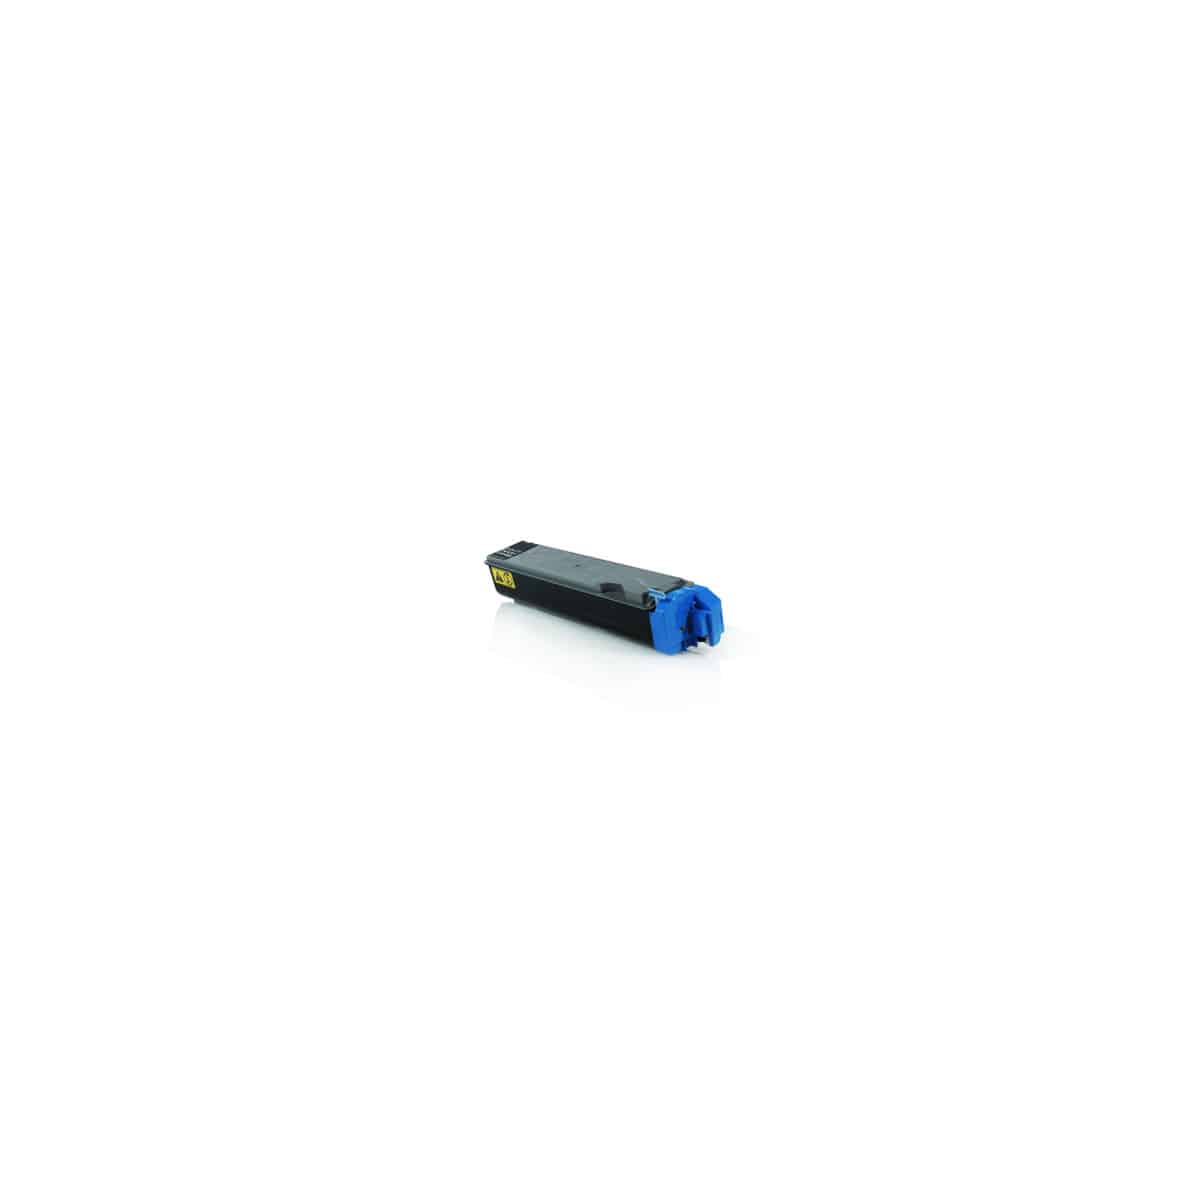 TK-5135 C Toner laser compatible Kyocera 1T02PACNL0 - Cyan